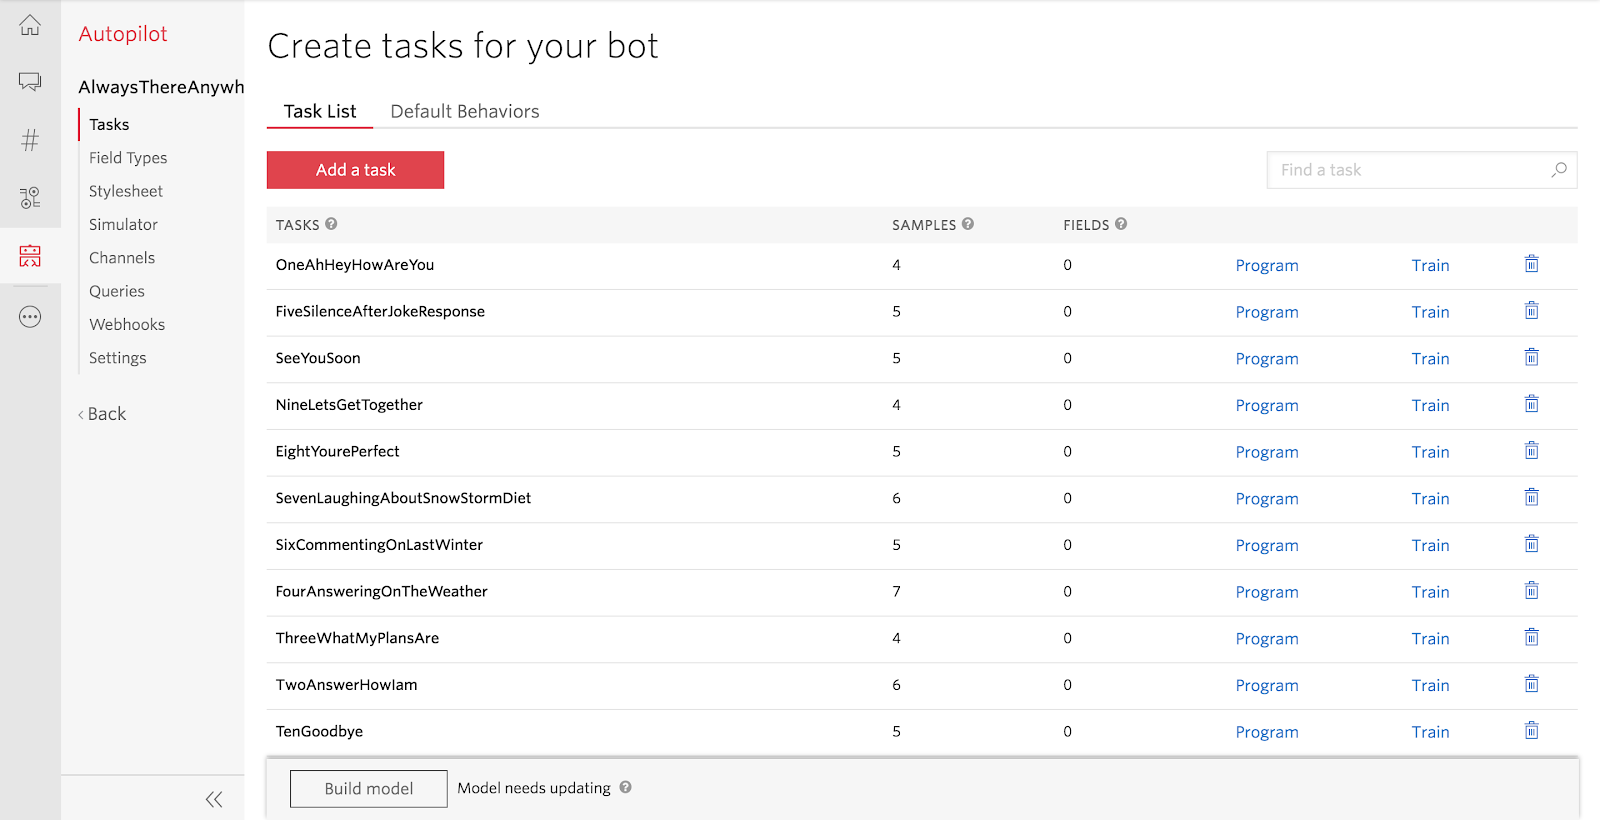 Create new tasks for your Twilio Autopilot bot